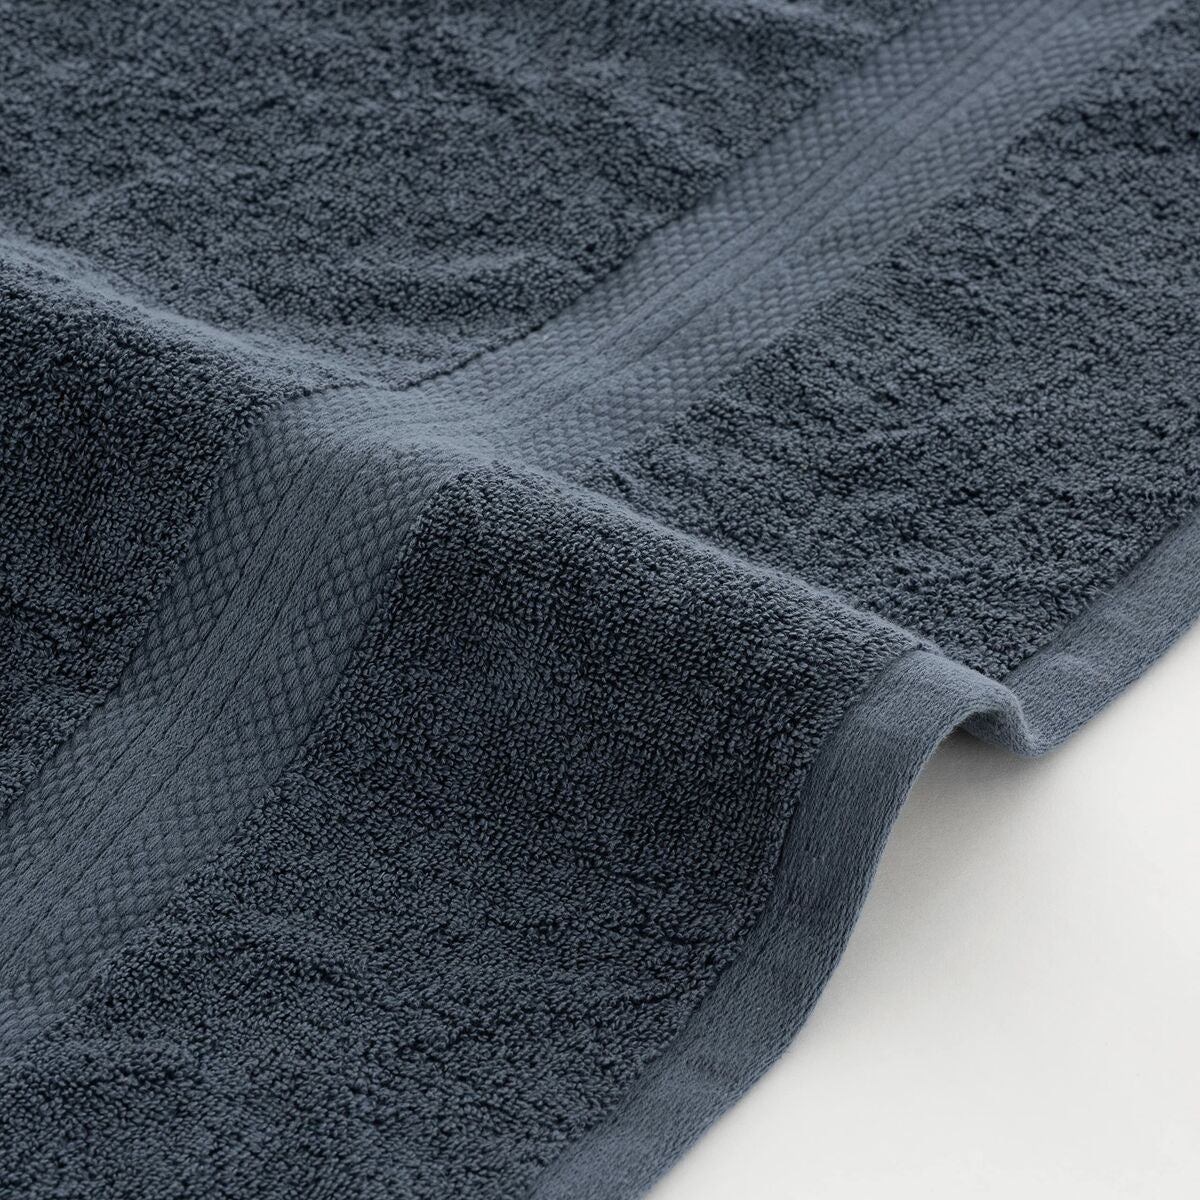 Bath towel SG Hogar Denim Blue - 2 pieces